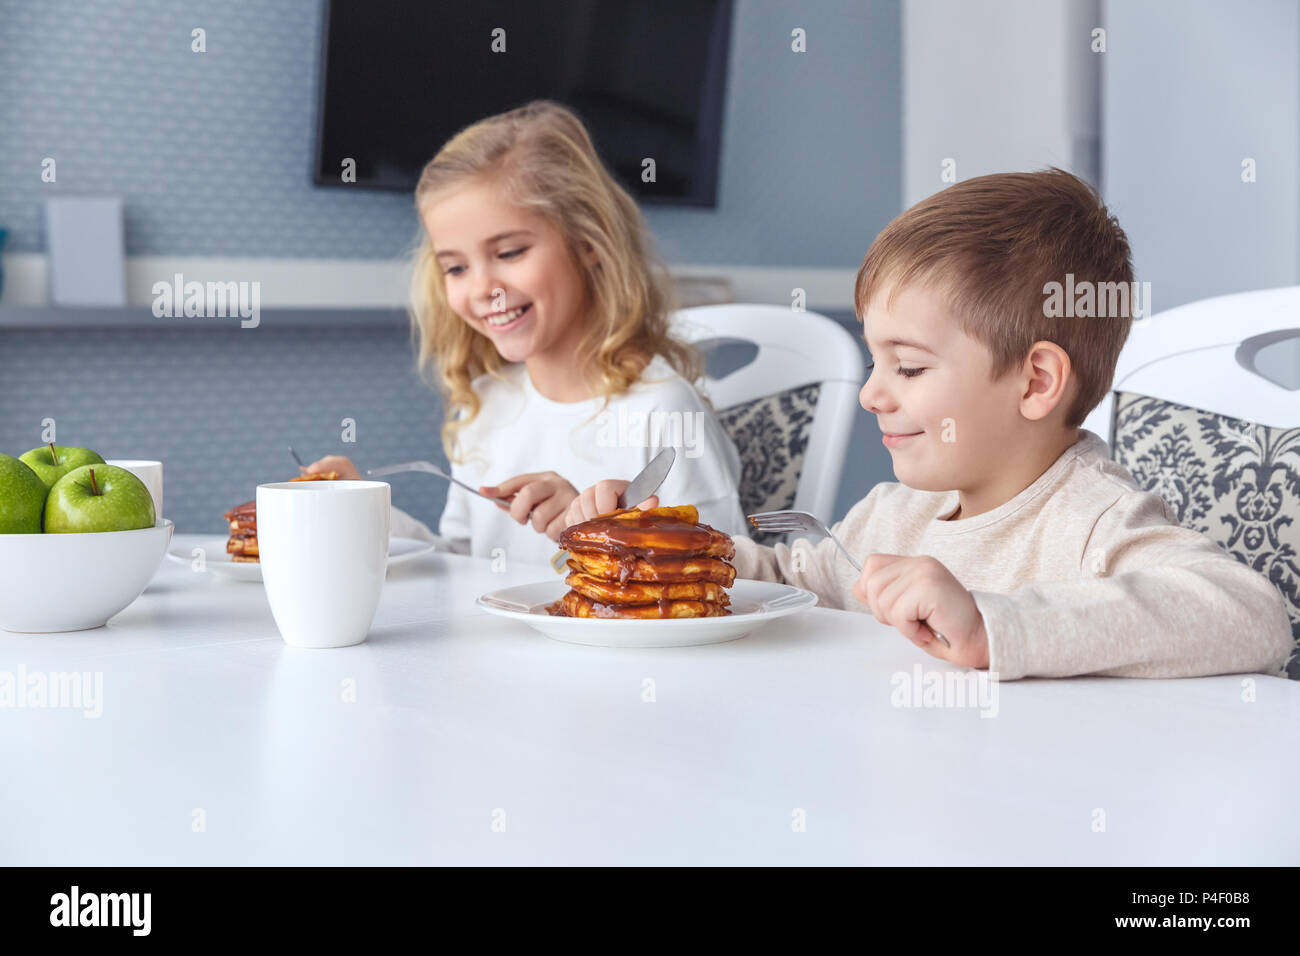 adorable little kids having breakfast together Stock Photo